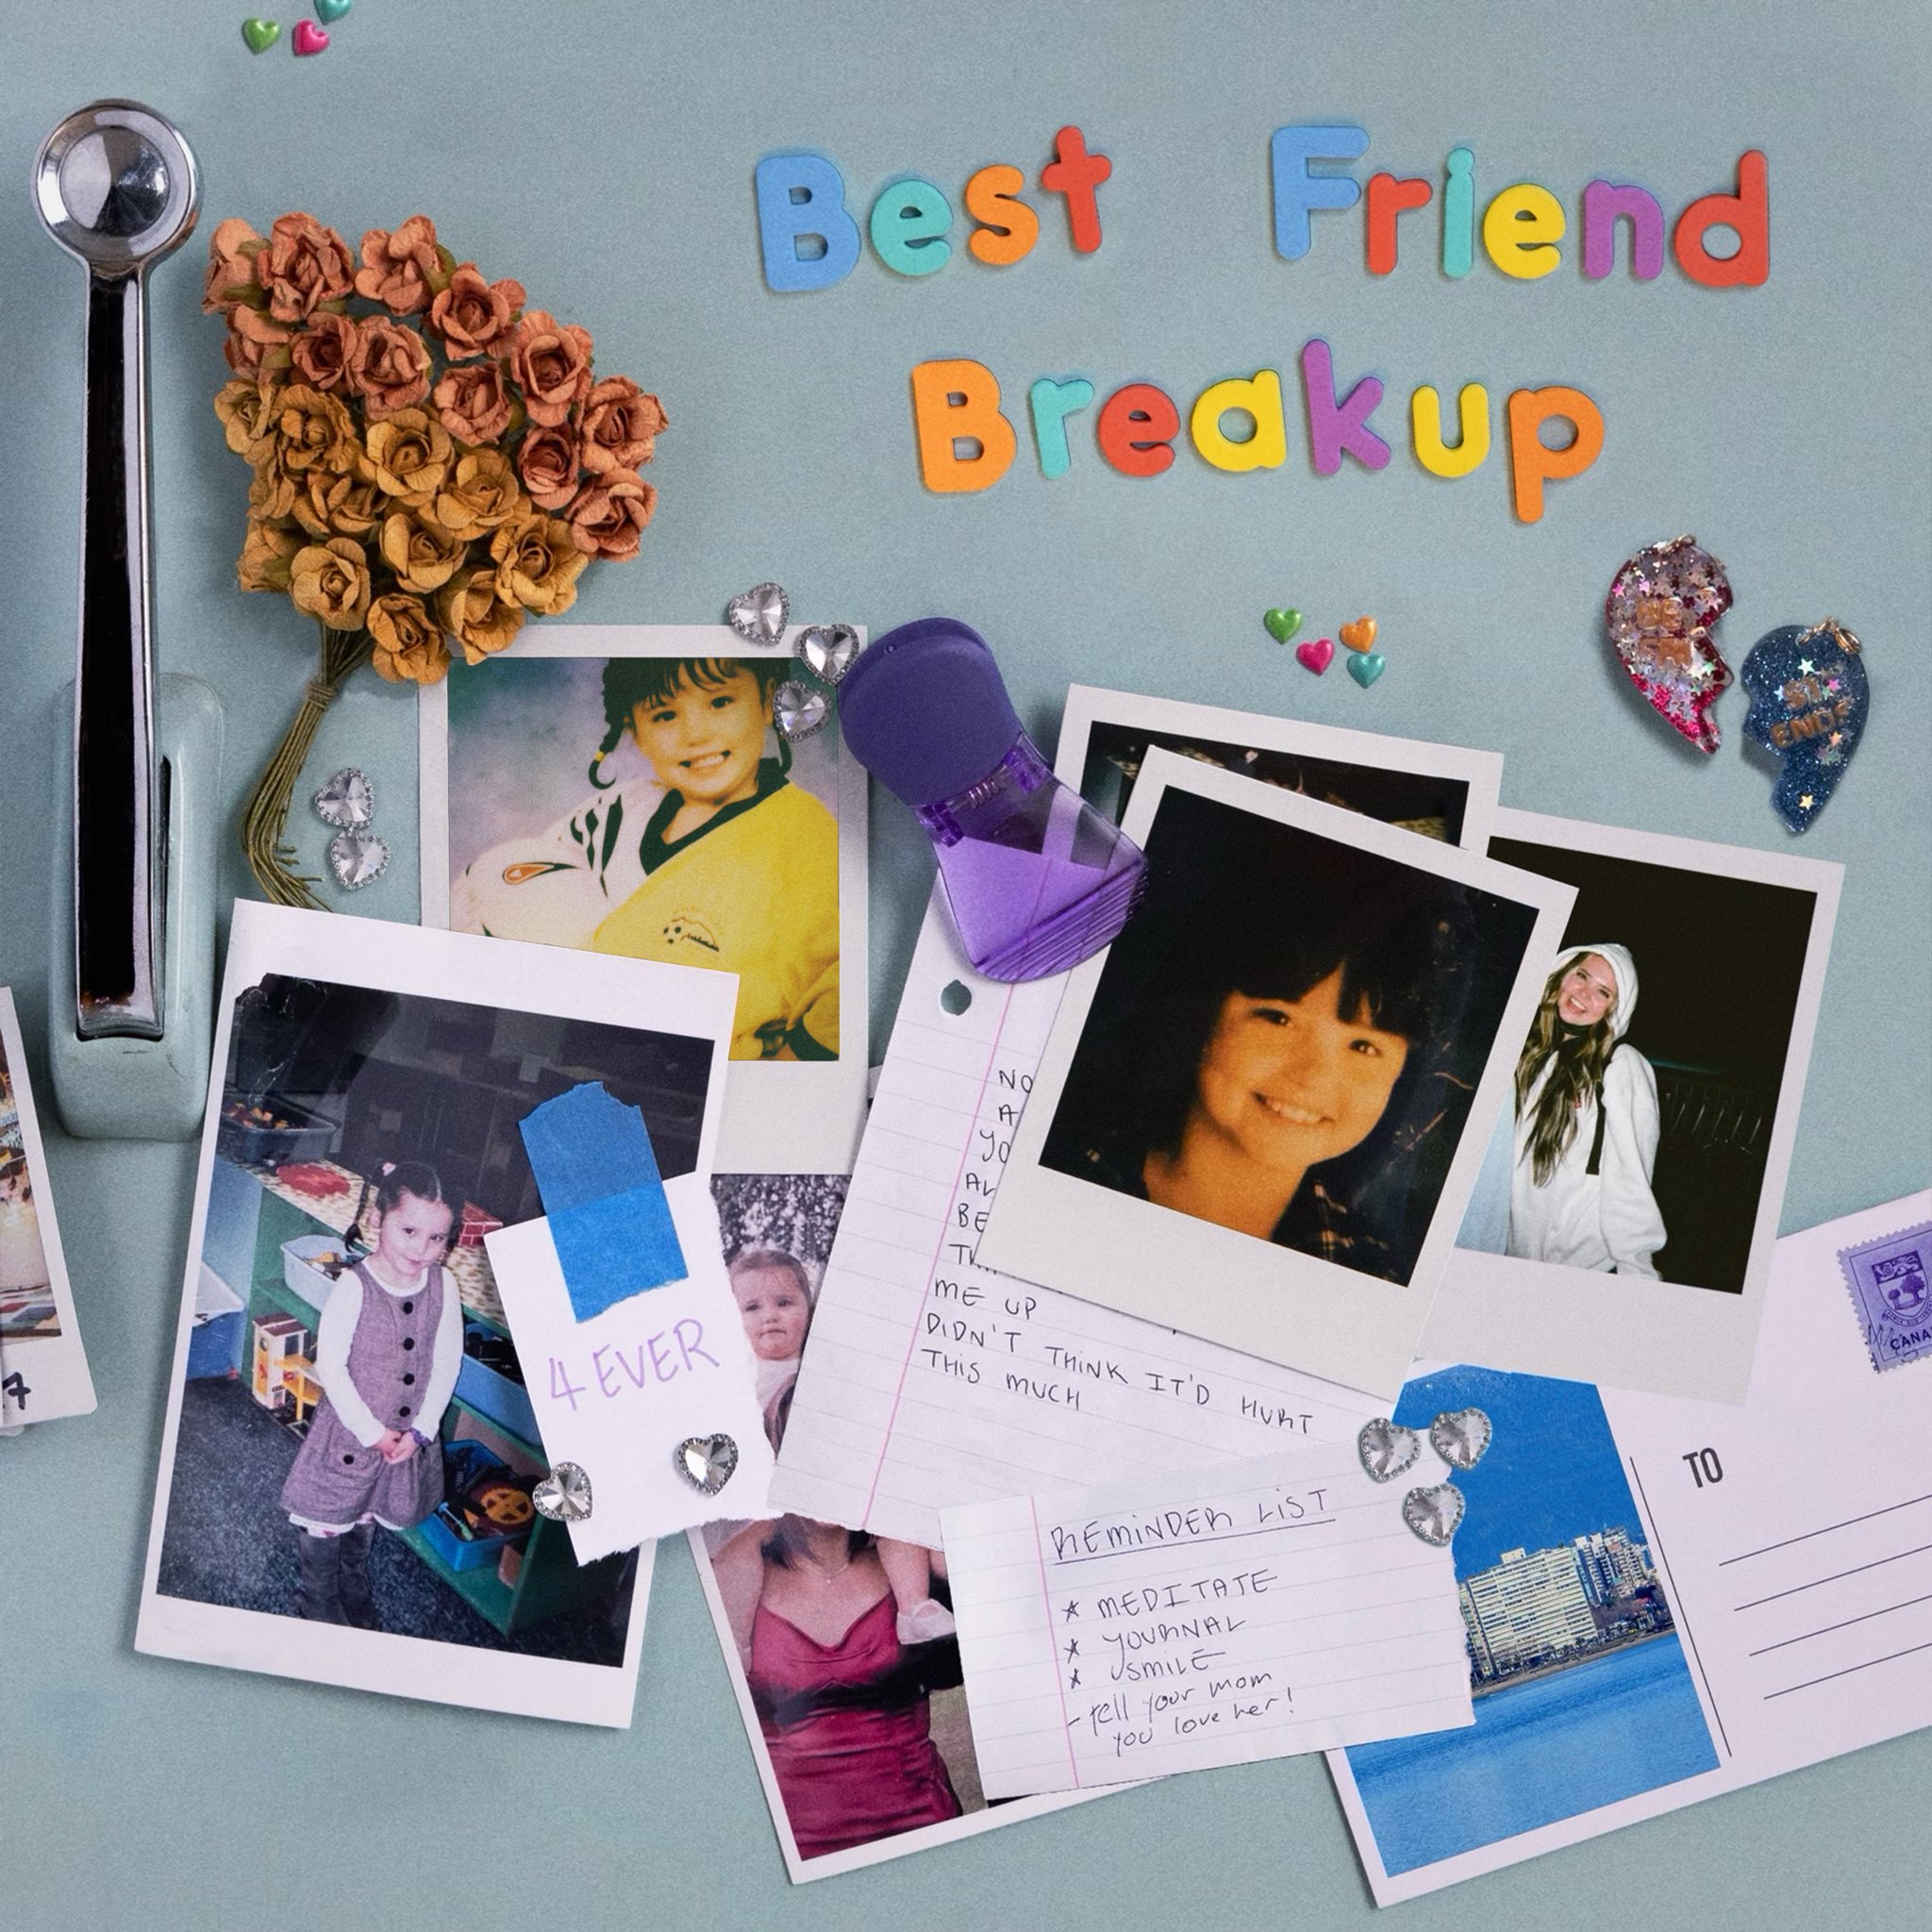 Lauren Spencer Smith — Best Friend Breakup cover artwork